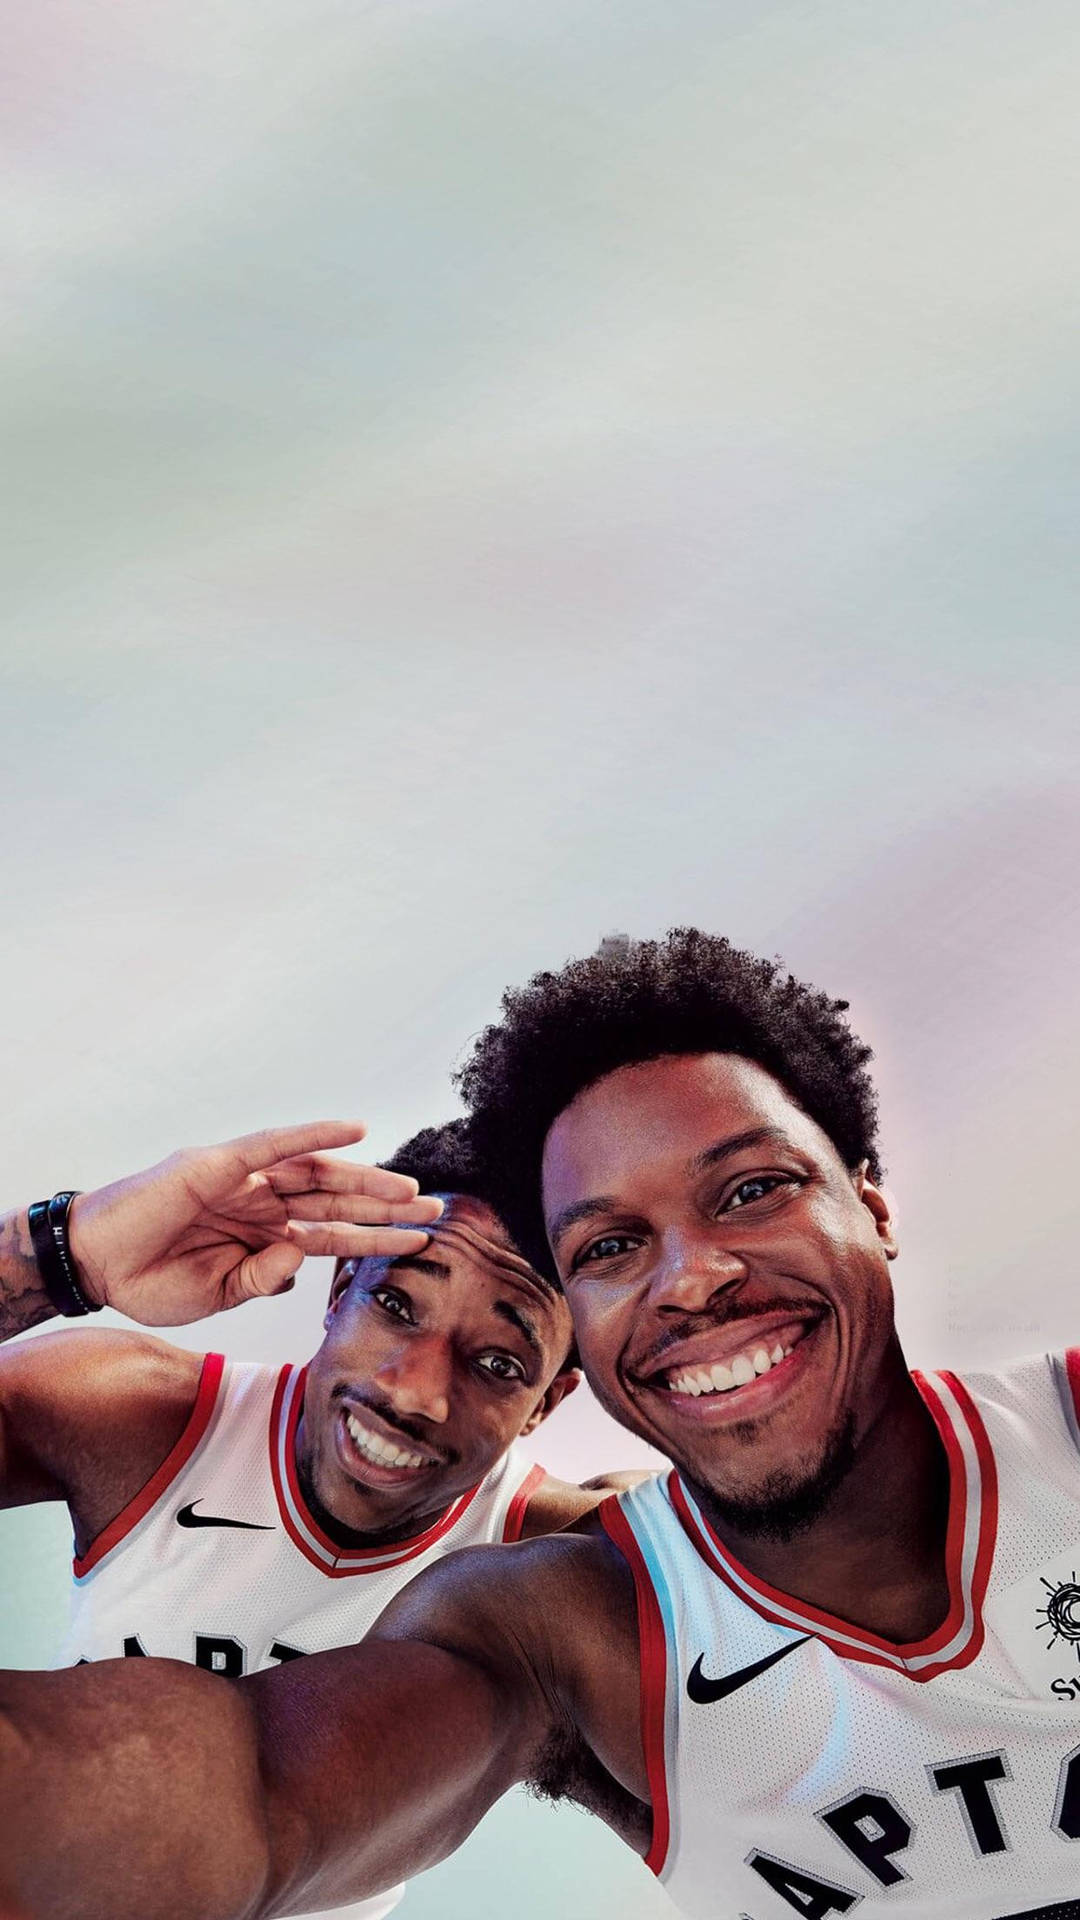 NBA stars Kyle Lowry and DeMar DeRozan sharing a light moment with a selfie. Wallpaper